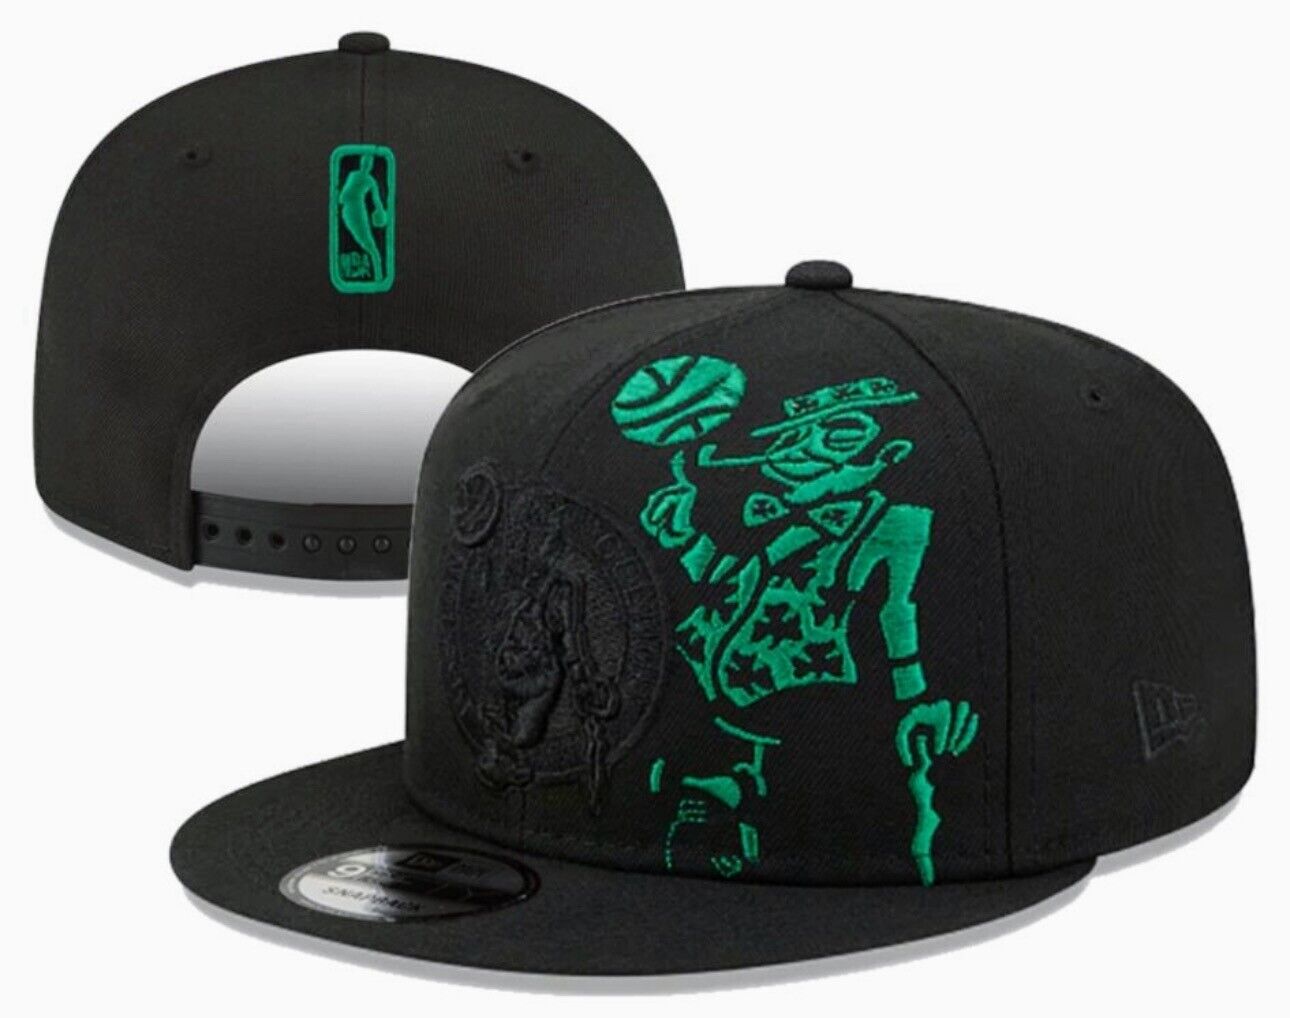 Boston Celtics Hat Snapback Adjustable Fit Cap Black Green Free Fast Ship